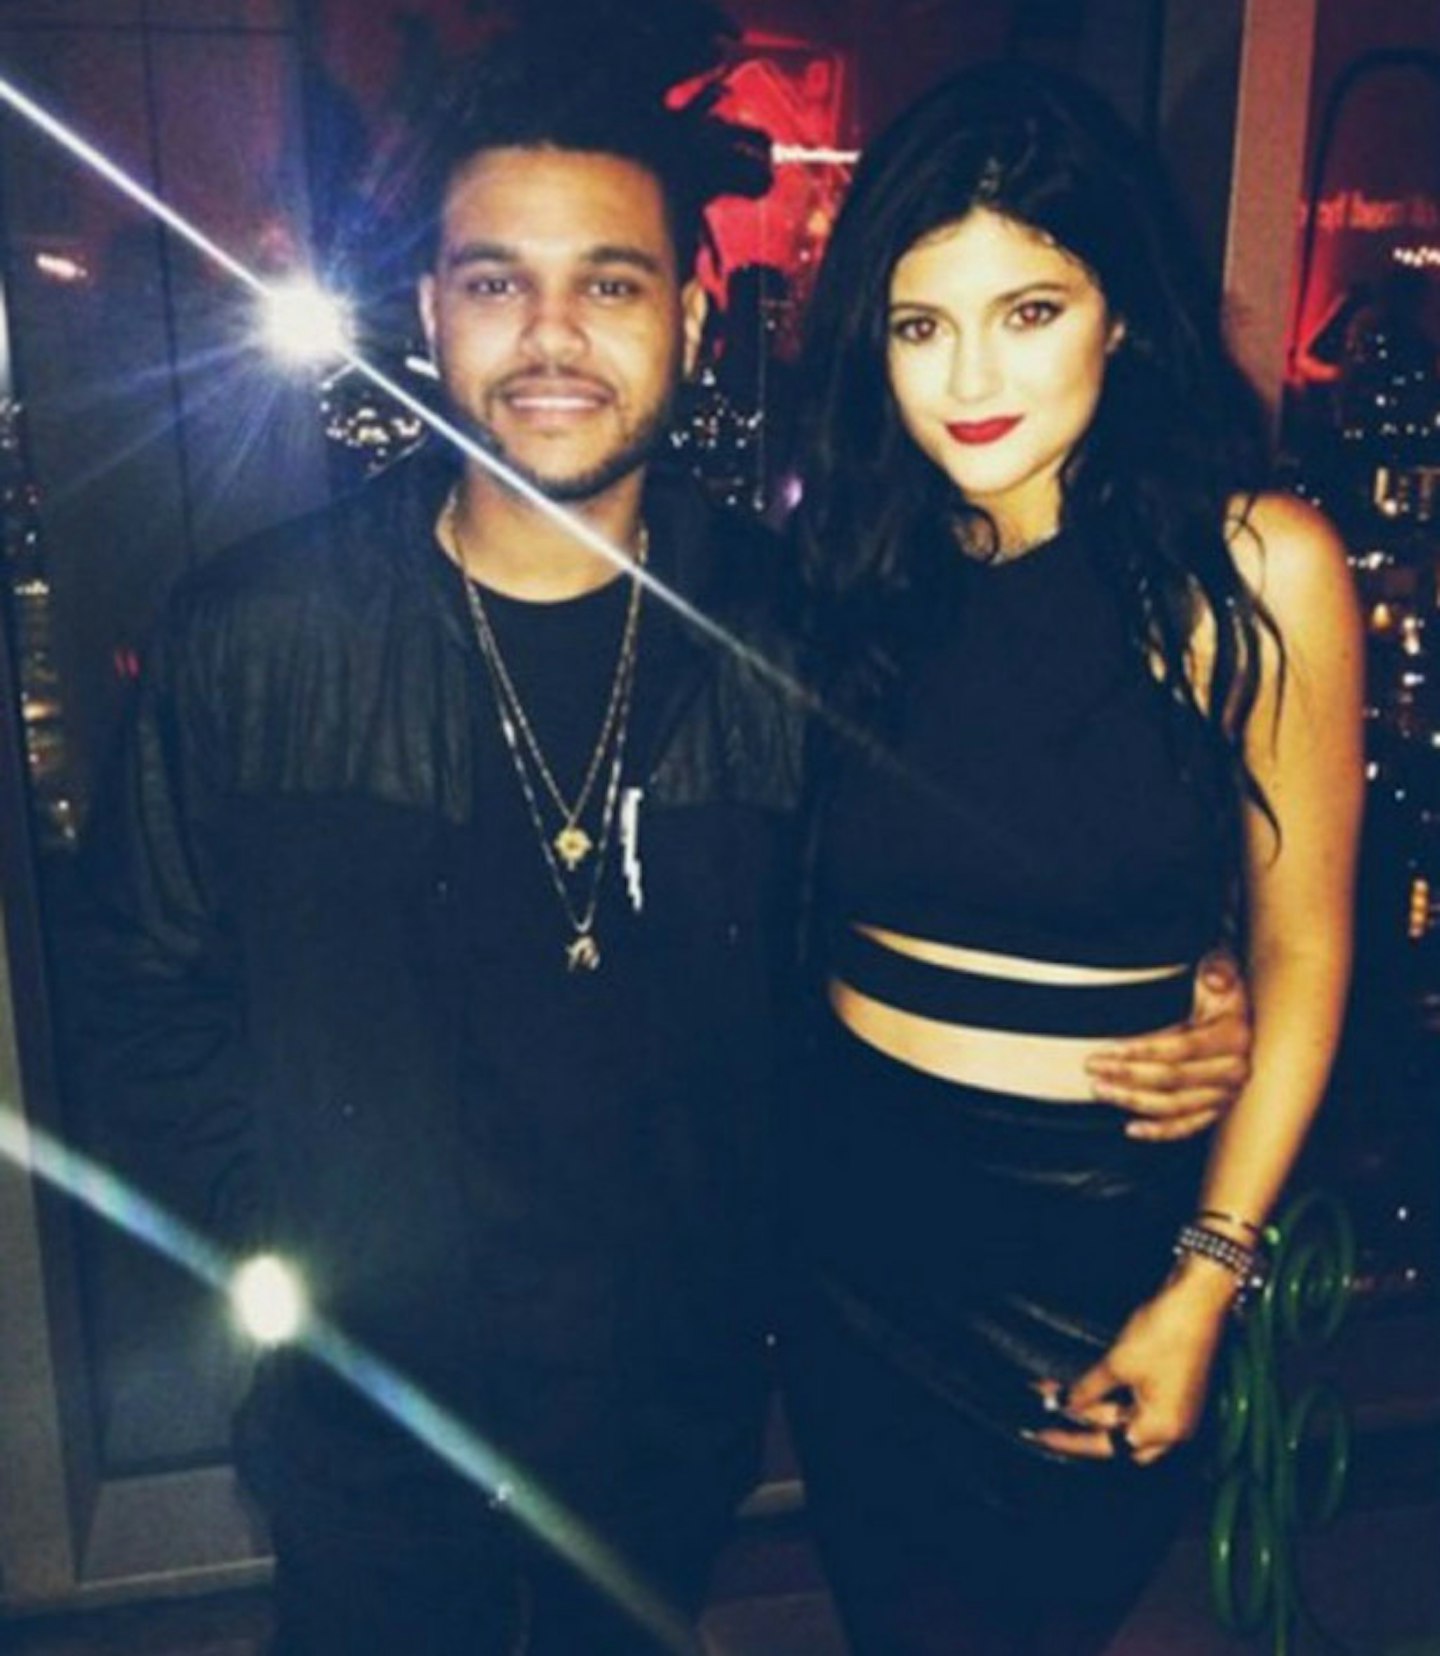 Kylie 16 with The Weeknd aka Abel Tesfaye